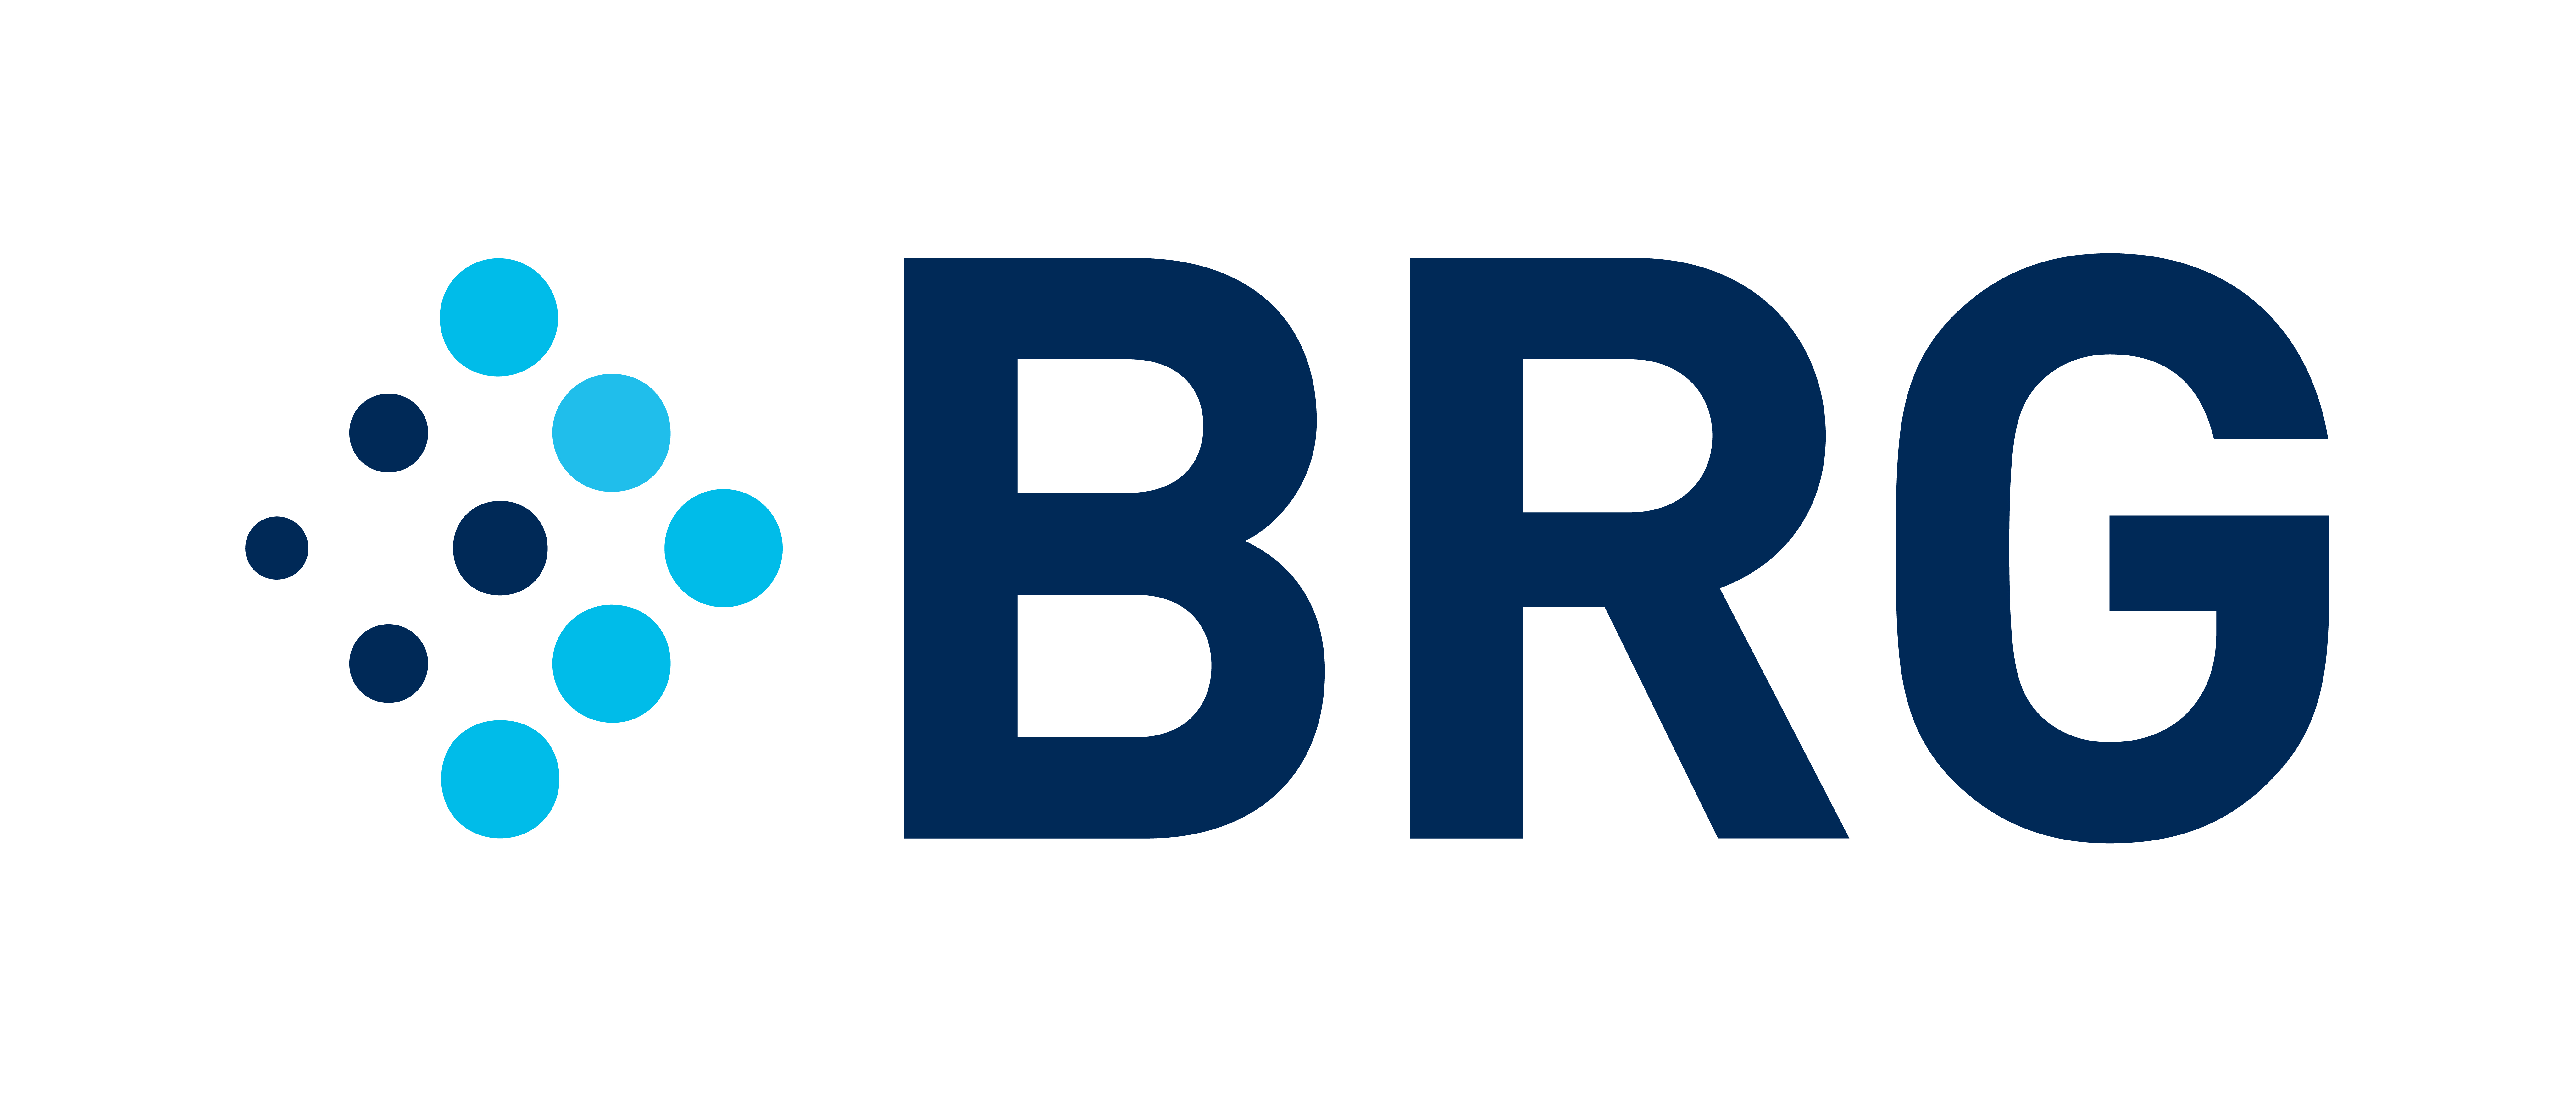 BRG Logo